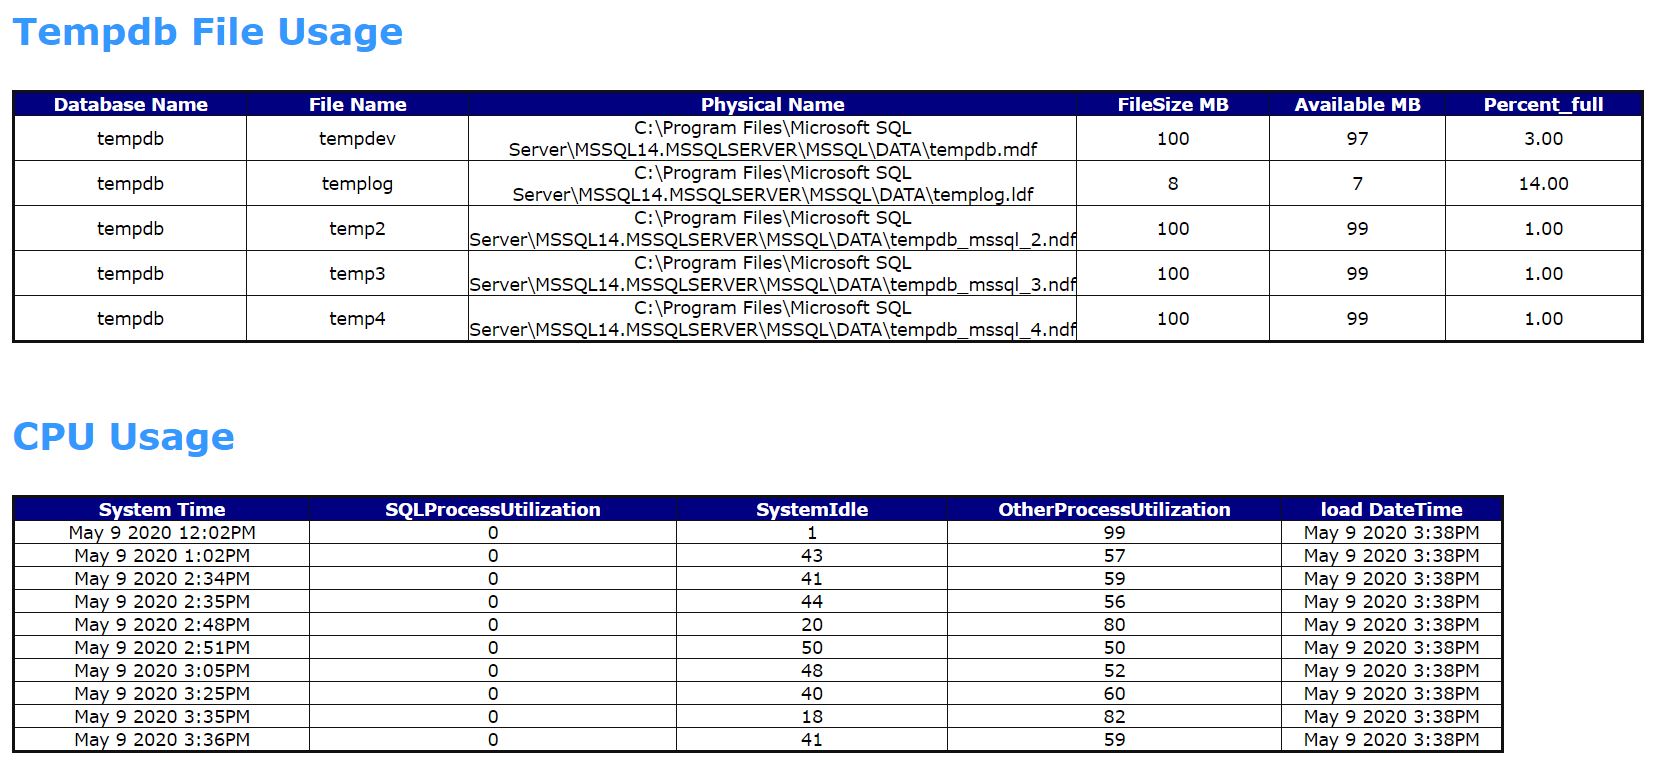 SQL Server Health Check HTML Report - udayarumilli.com Intended For Sql Server Health Check Report Template